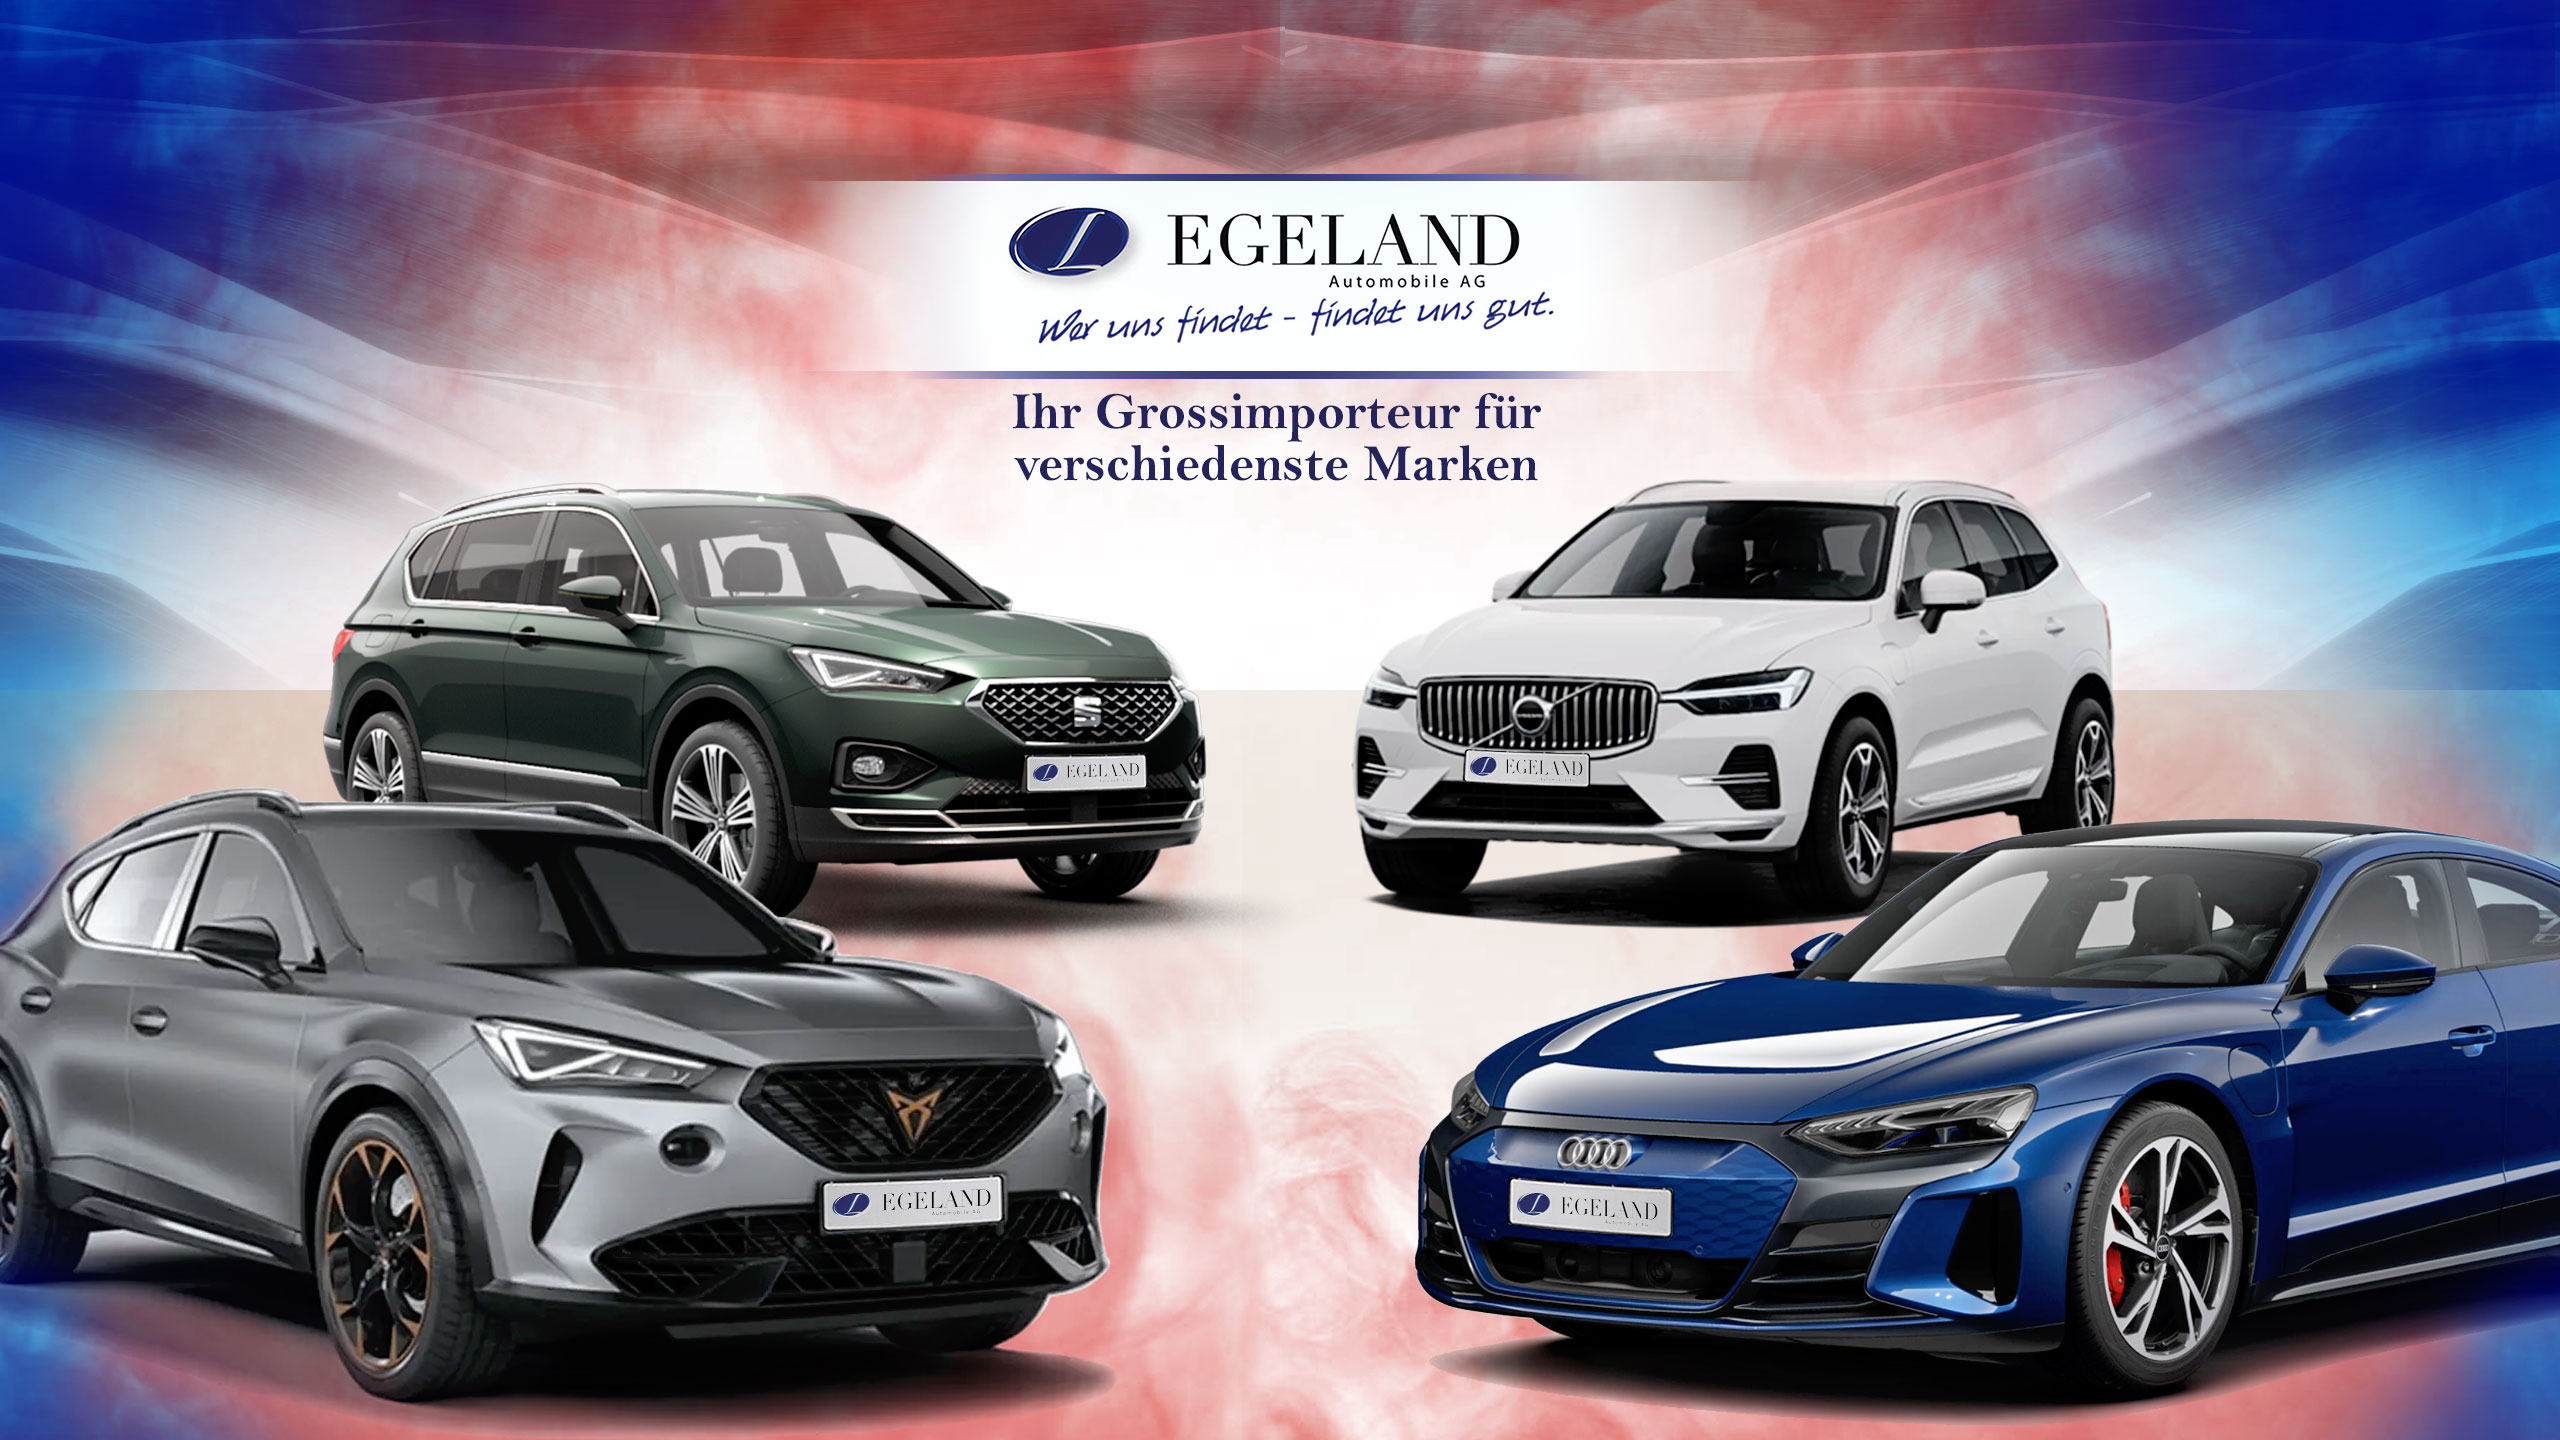 Egeland Automobile AG